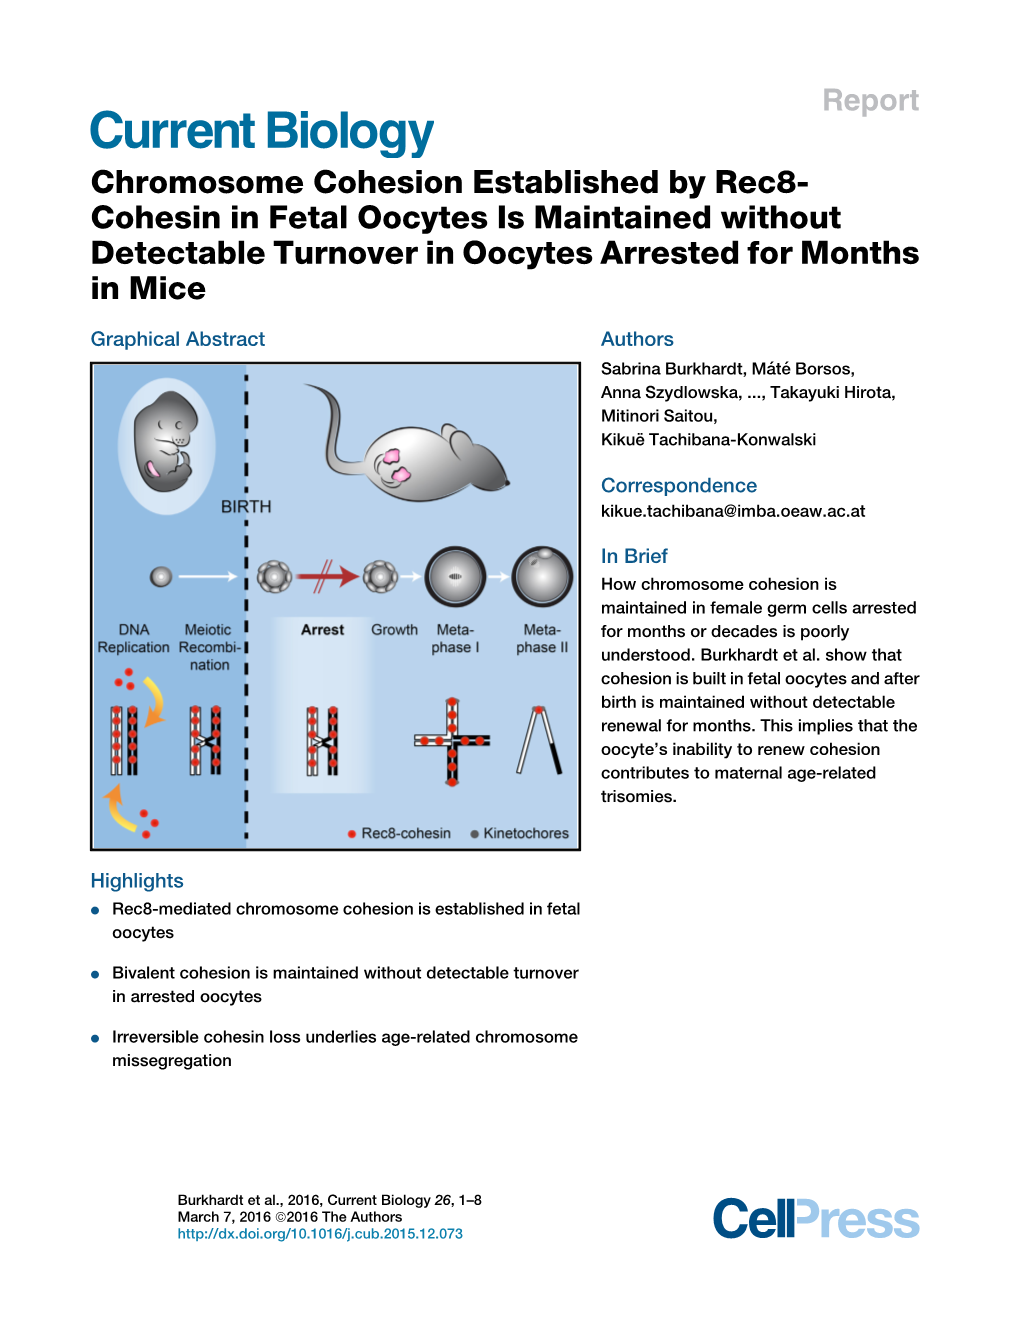 Chromosome Cohesion Established by Rec8-Cohesin in Fetal Oocytes